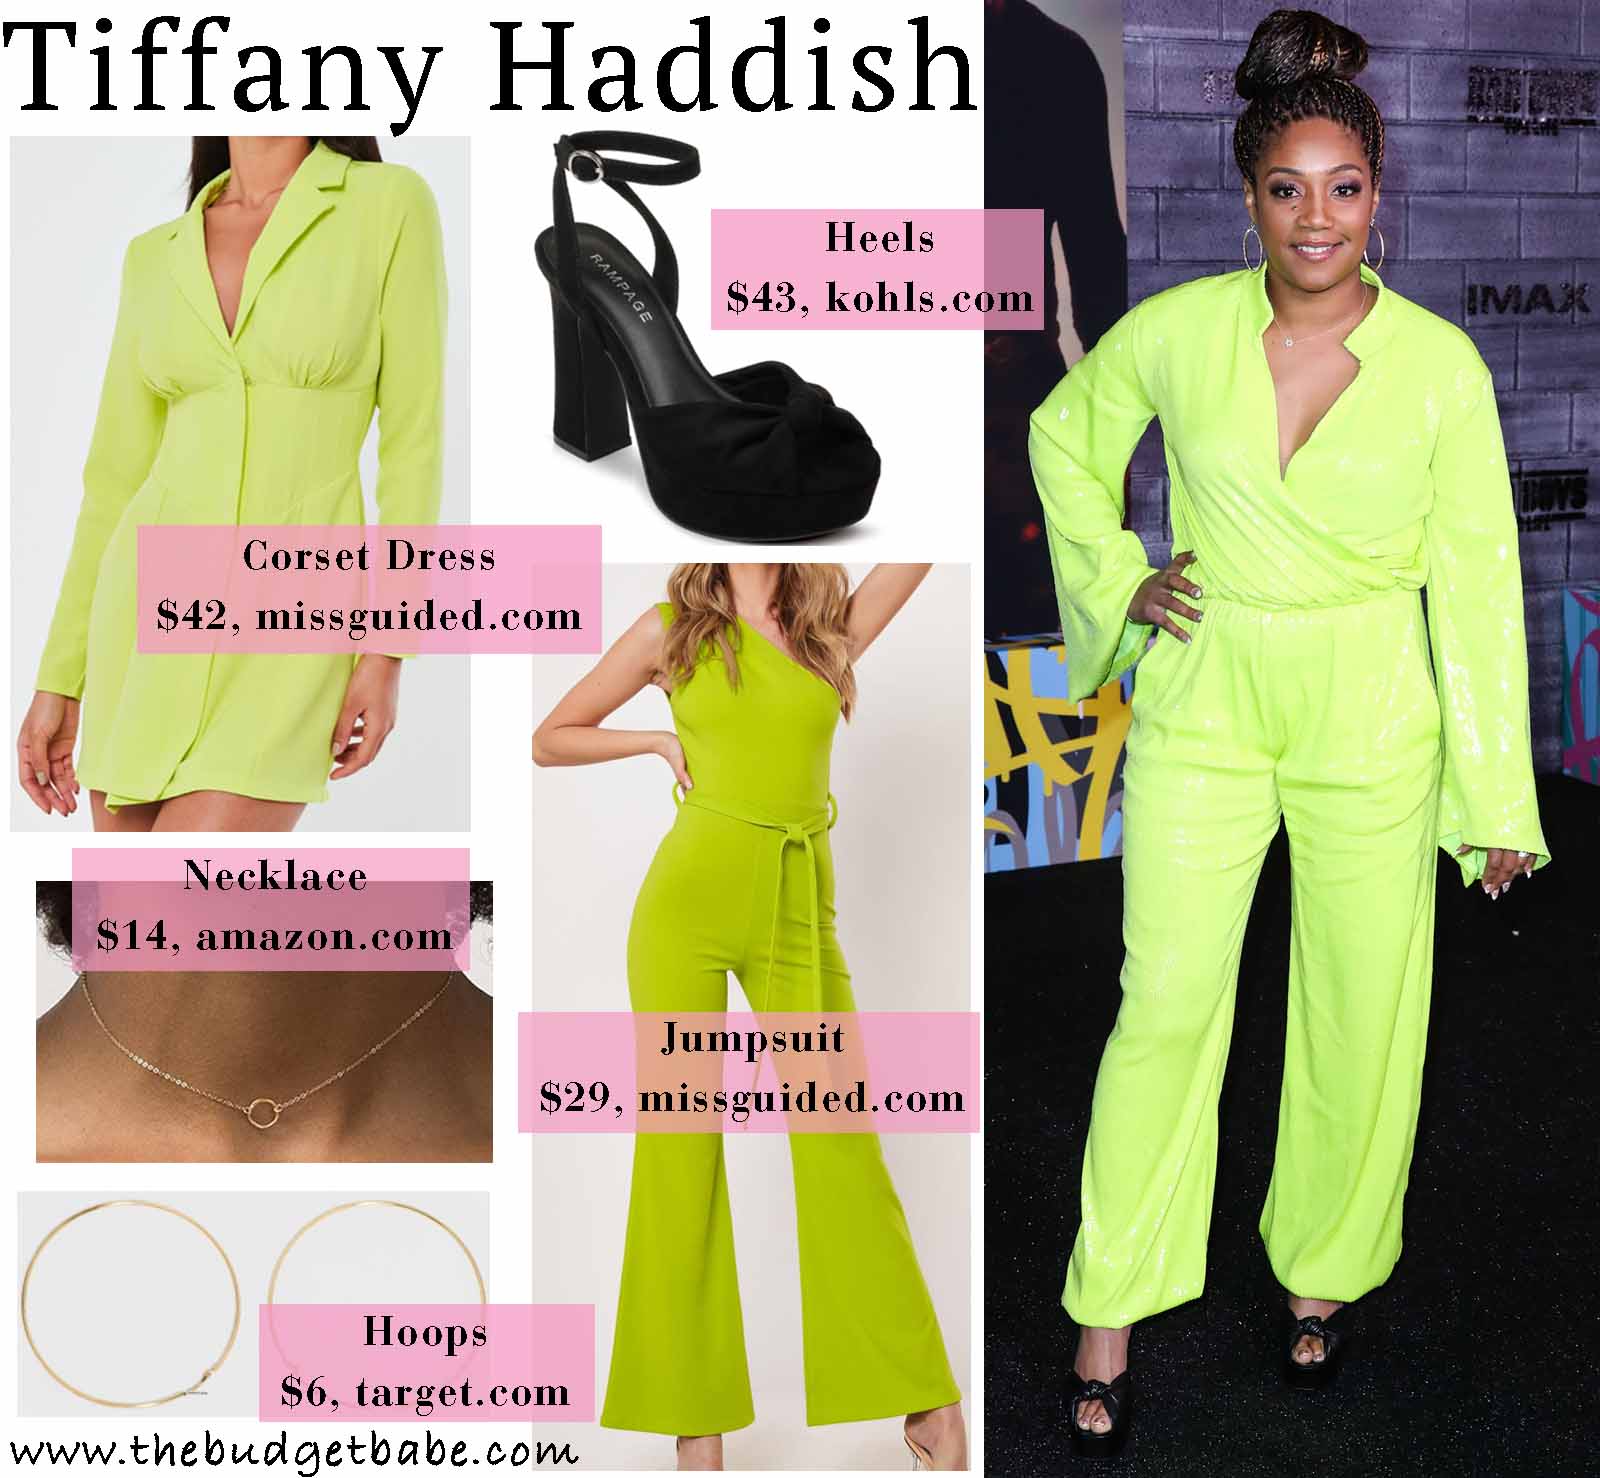 Tiffany Haddish glows in a neon jumpsuit!